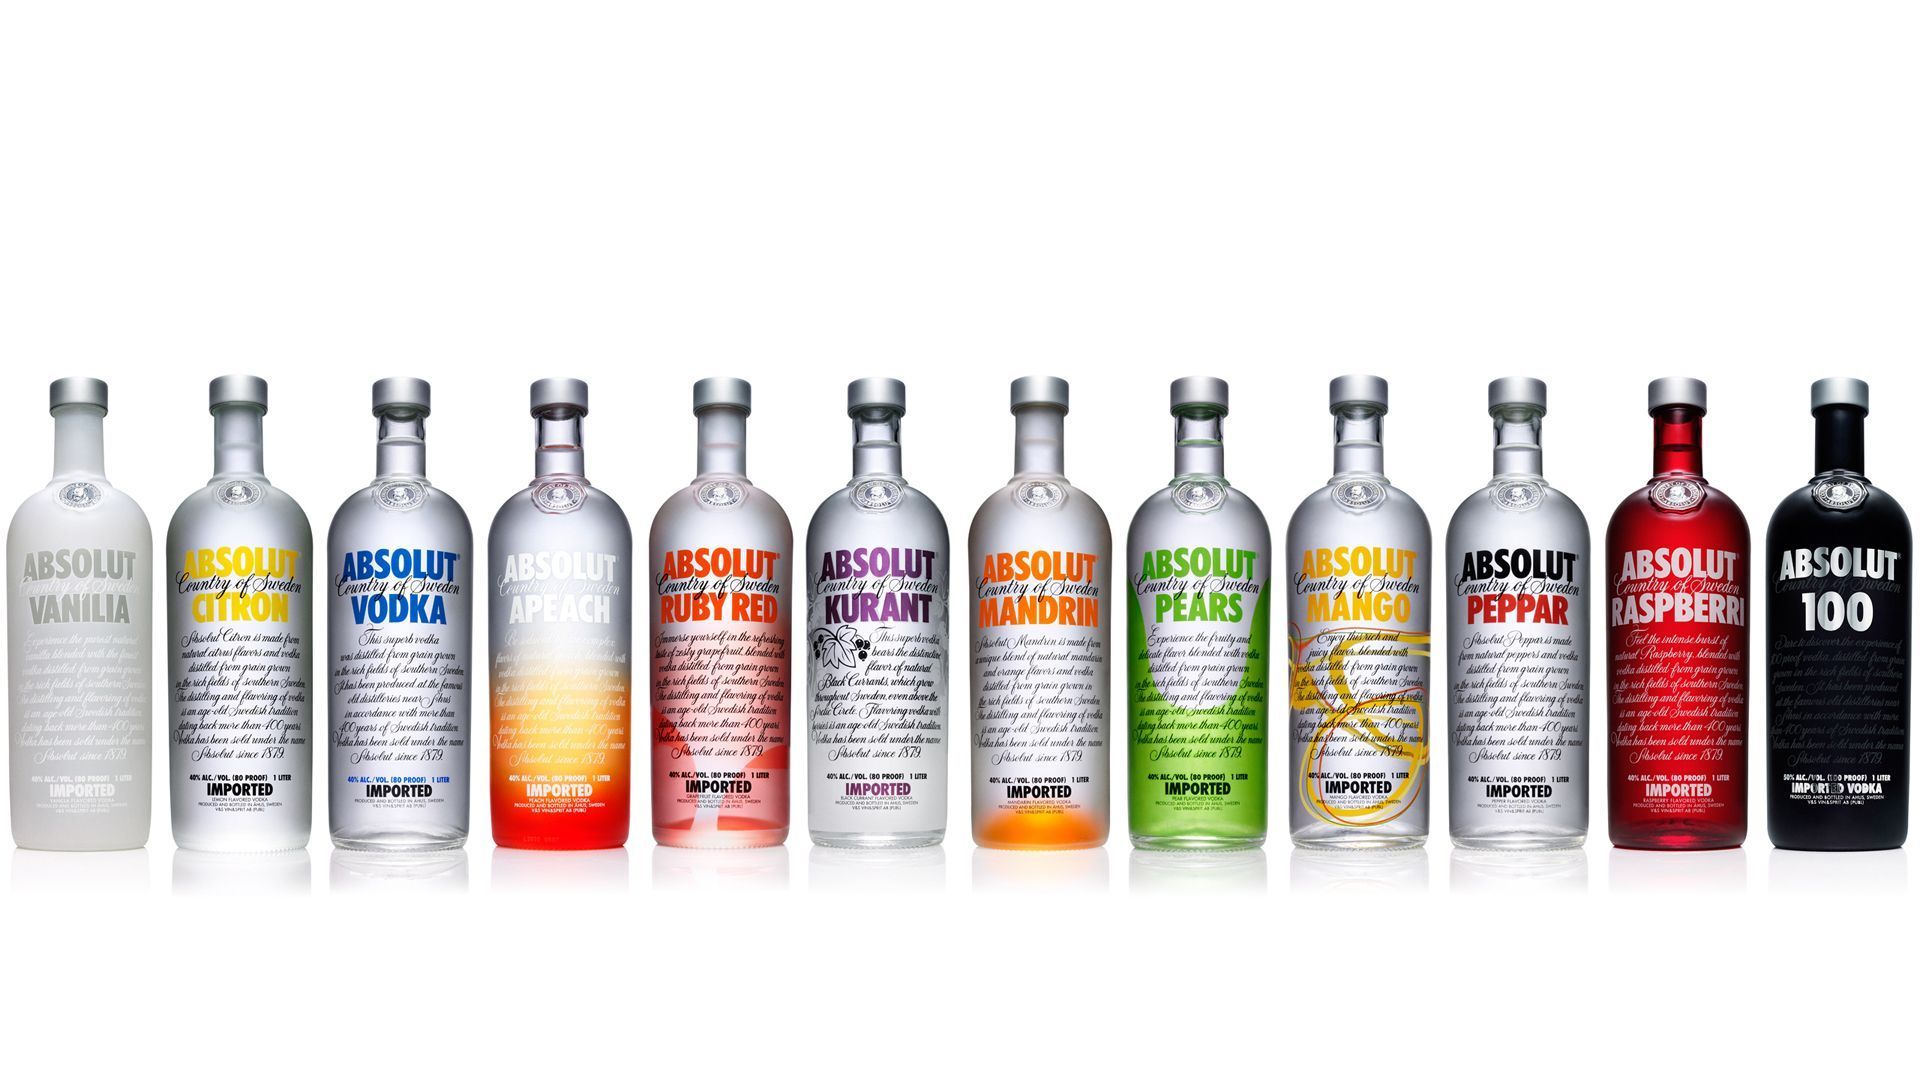 Absolut Vodka All Color Drinks images - Wallpaper